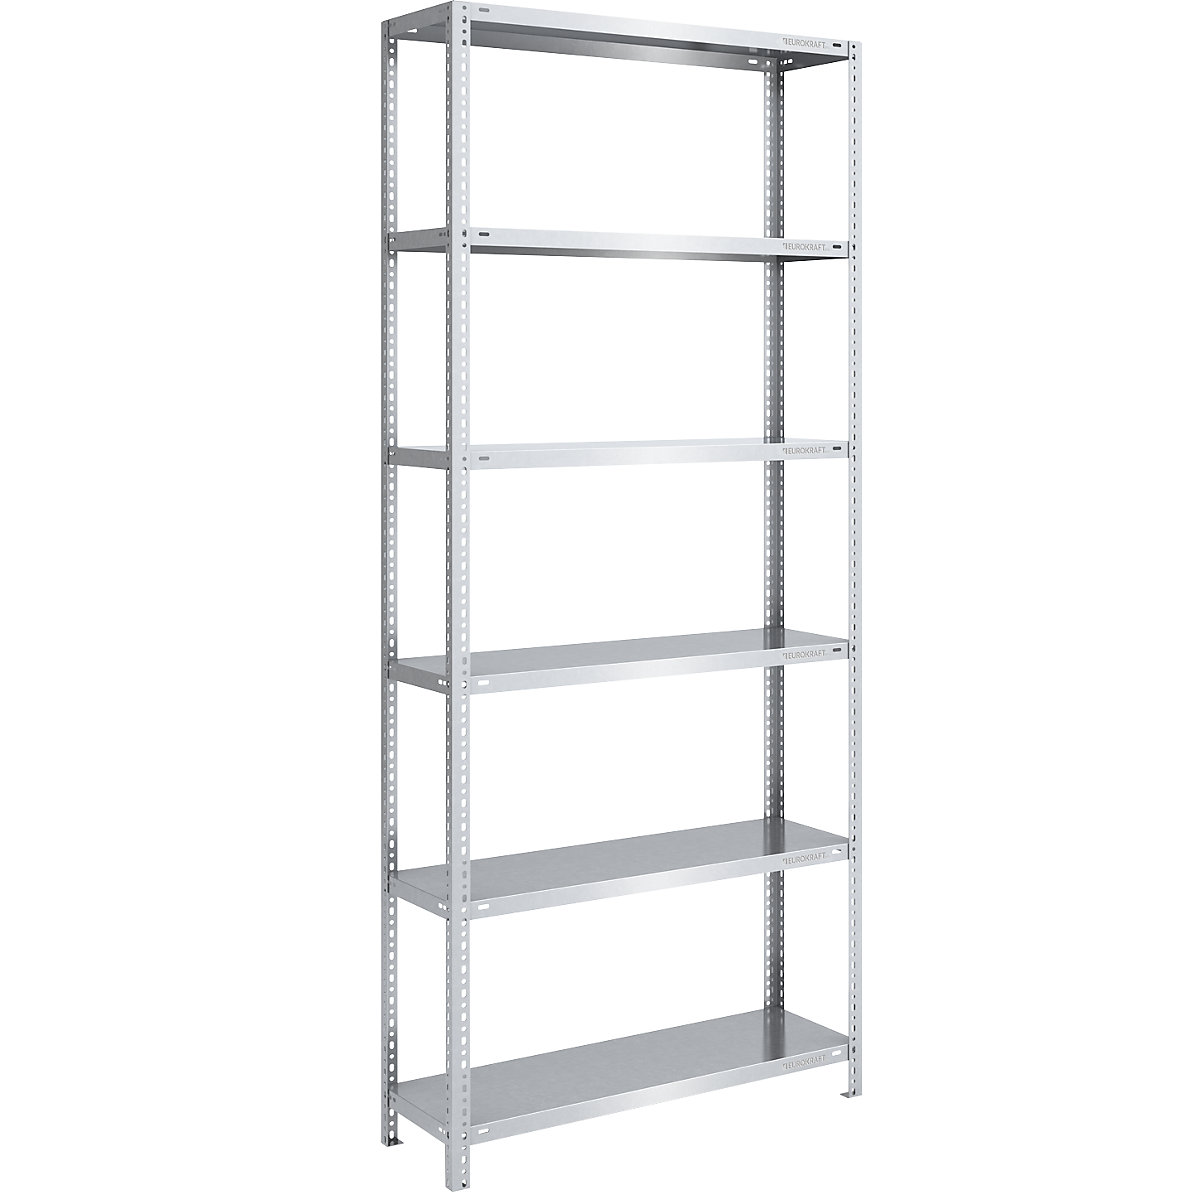 Bolt-together shelf unit, light duty, zinc plated – eurokraft pro, shelf unit height 2500 mm, shelf width 1000 mm, depth 400 mm, standard shelf unit-11